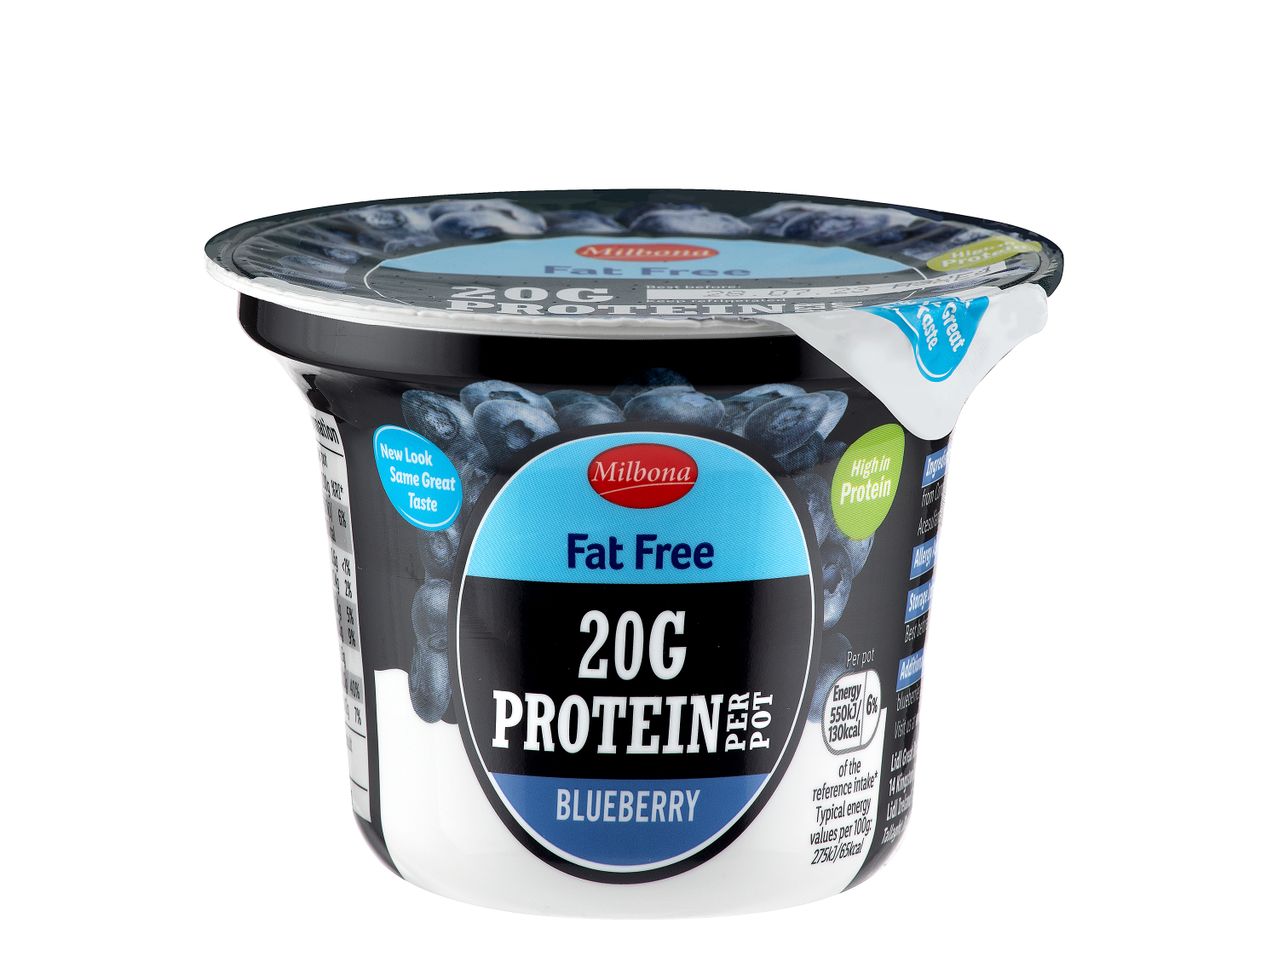 Go to full screen view: Milbona Fat Free High Protein Yoghurt - Image 1